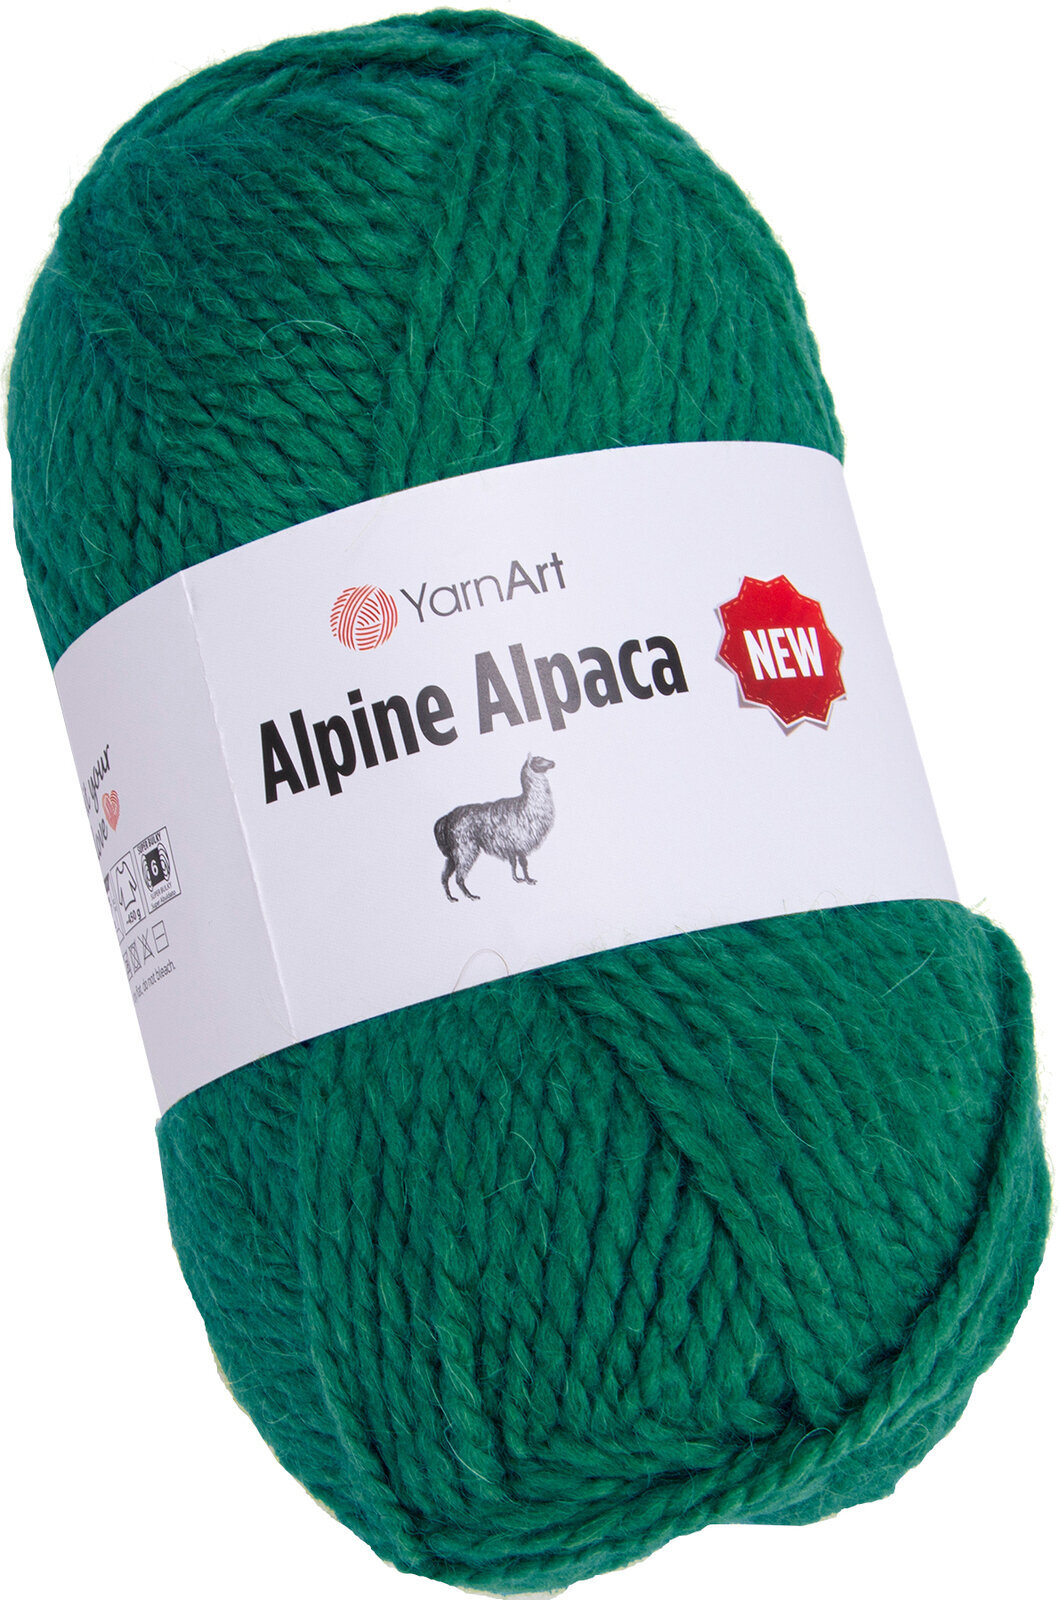 Stickgarn Yarn Art Alpine Alpaca New 1449